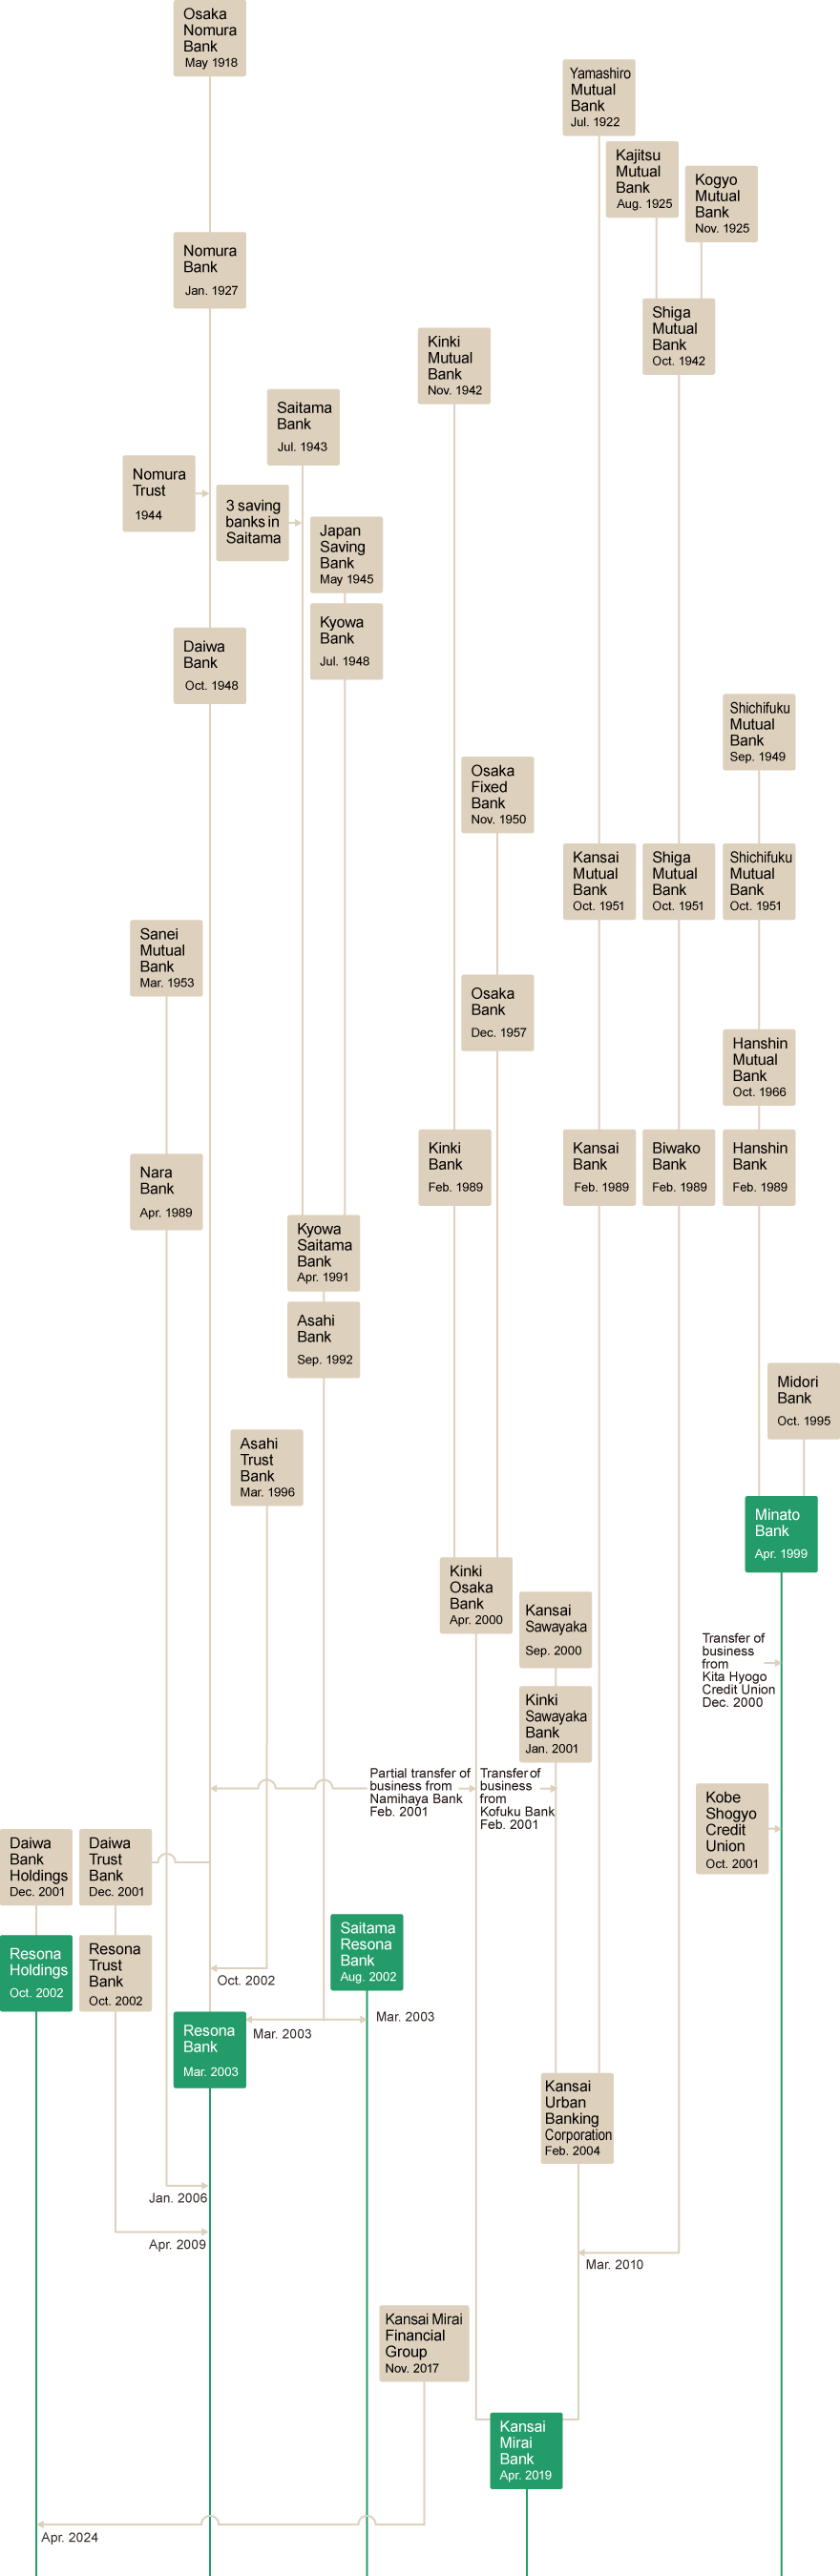 History of Resona, Outline of Resona Holdings